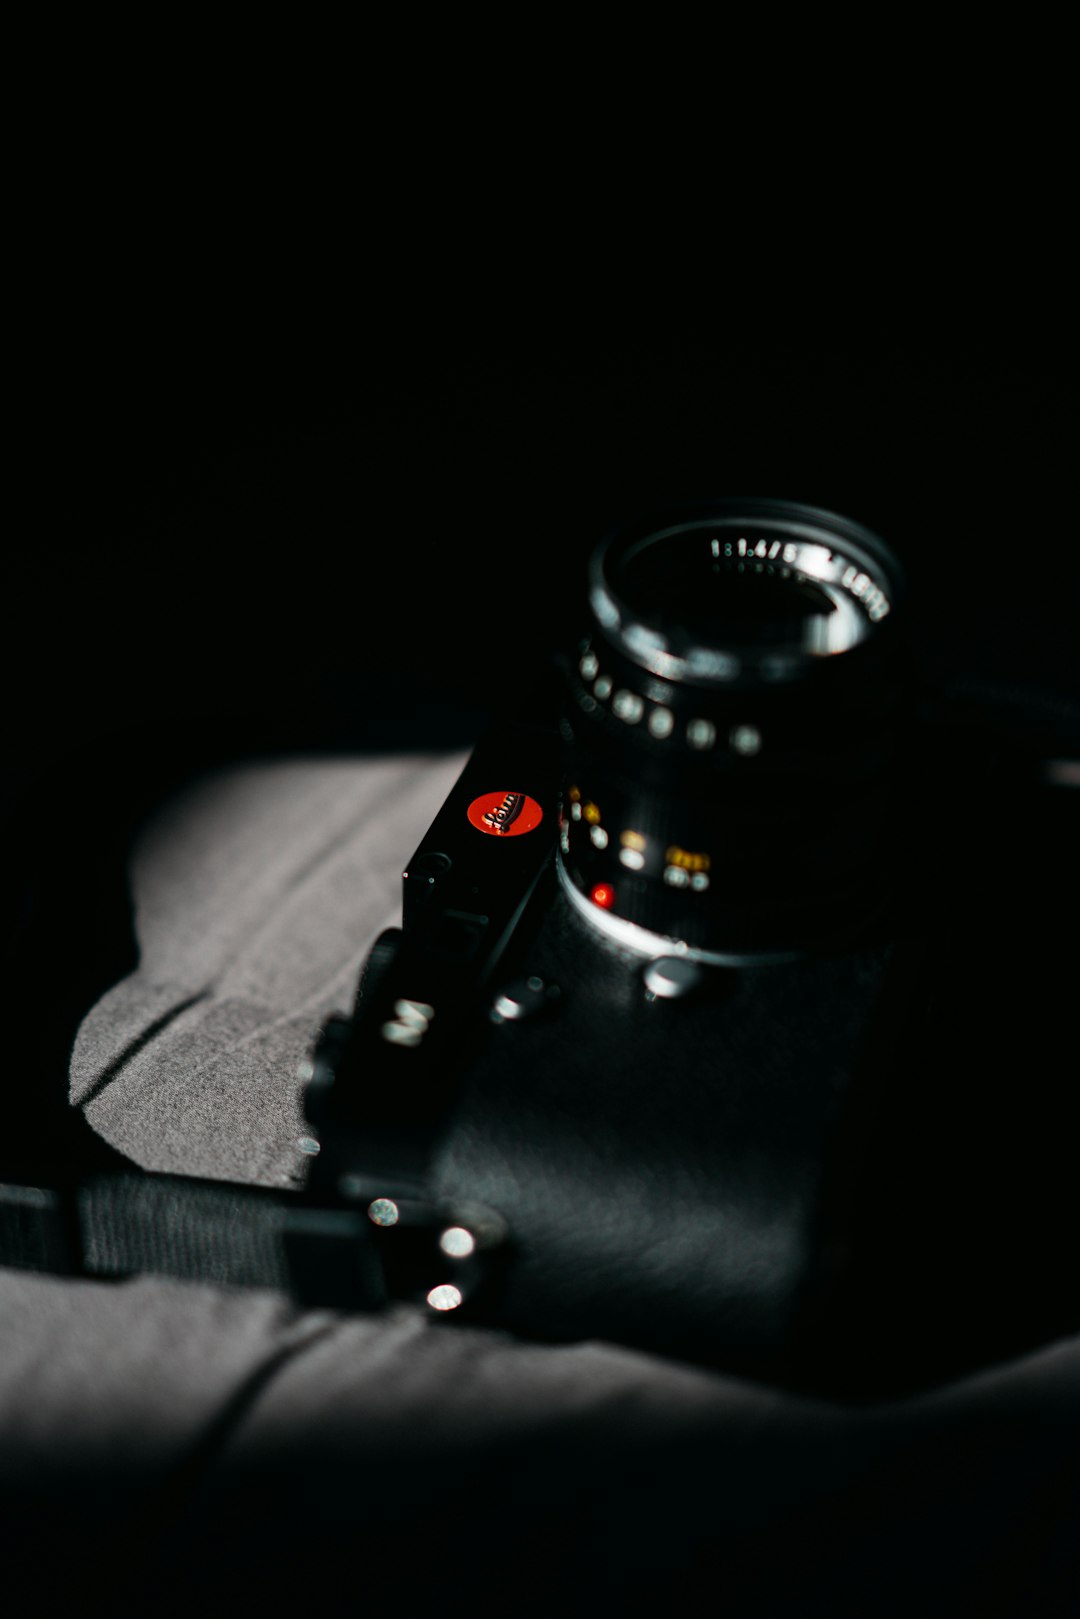 black dslr camera on white textile